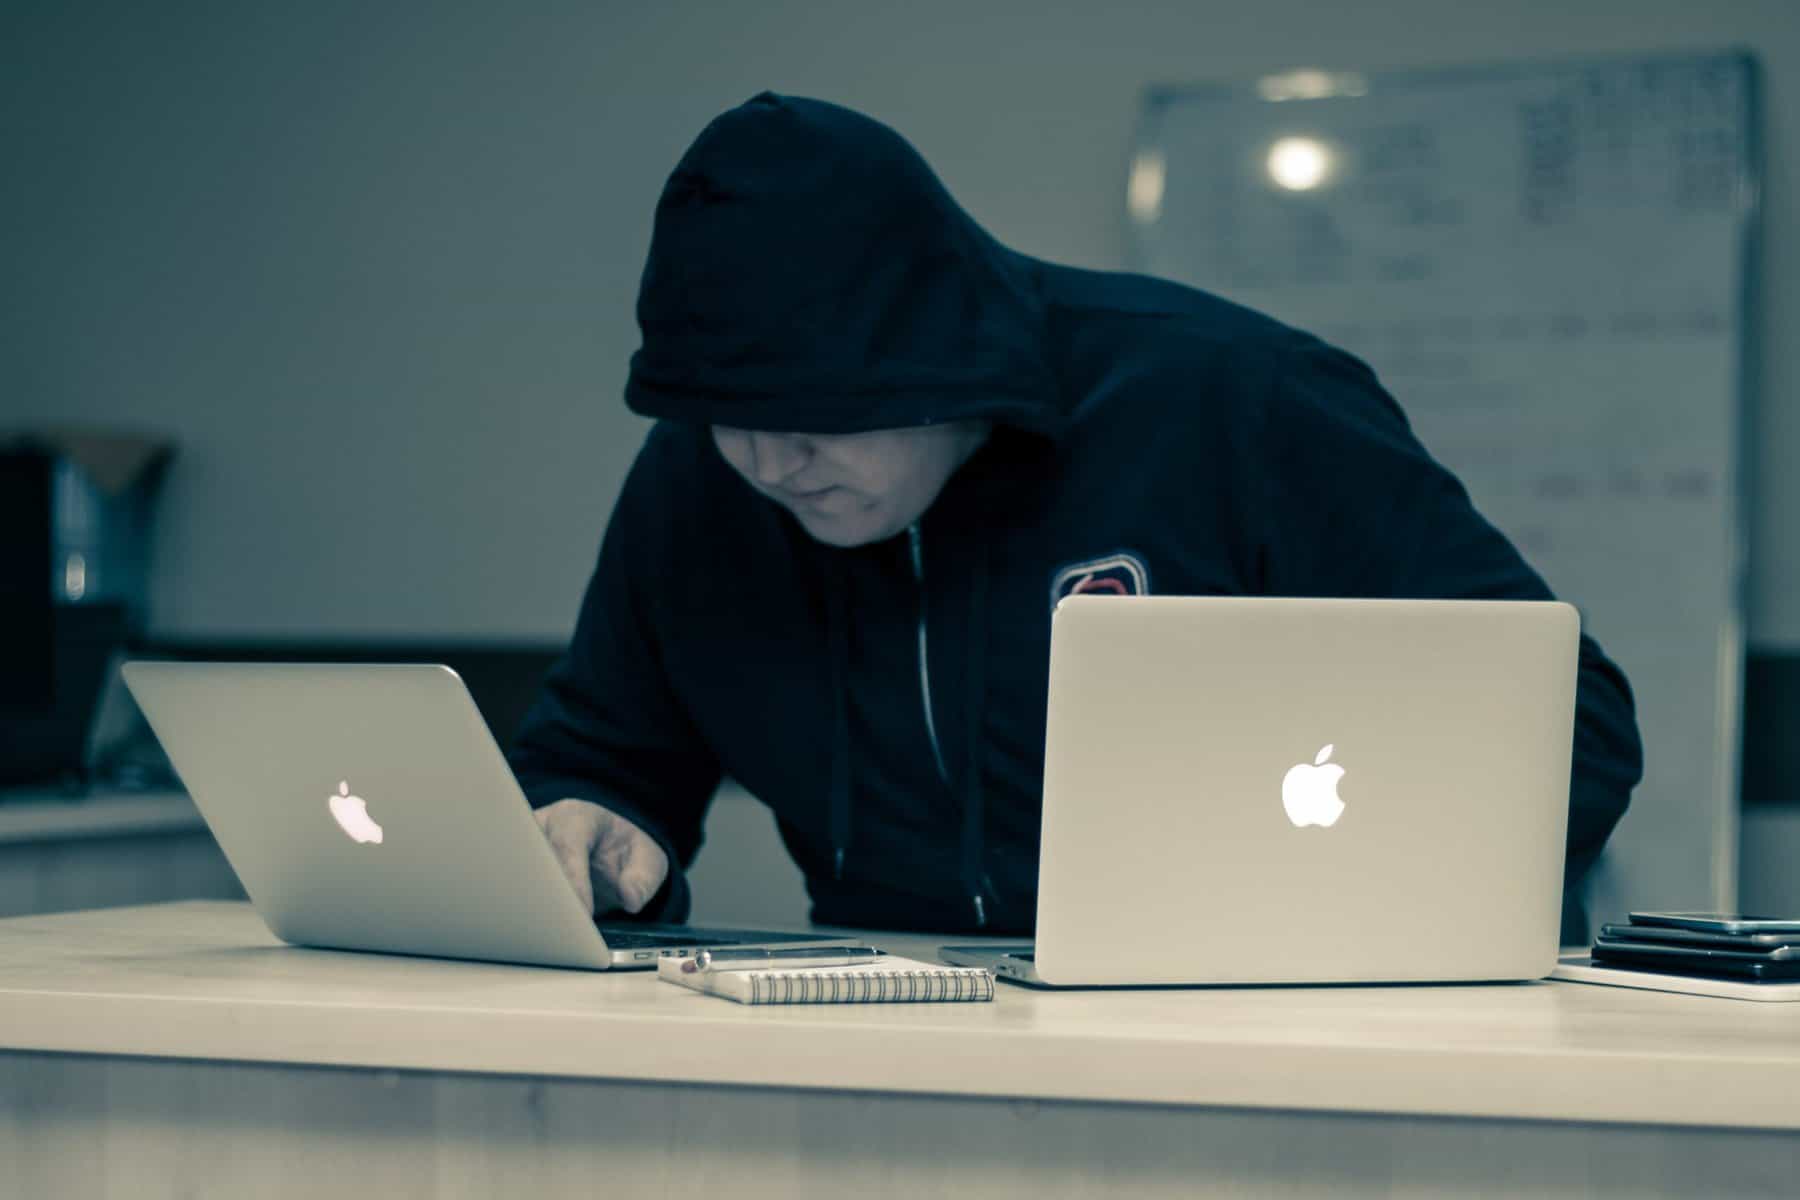 A hacker that has broken into an office building.